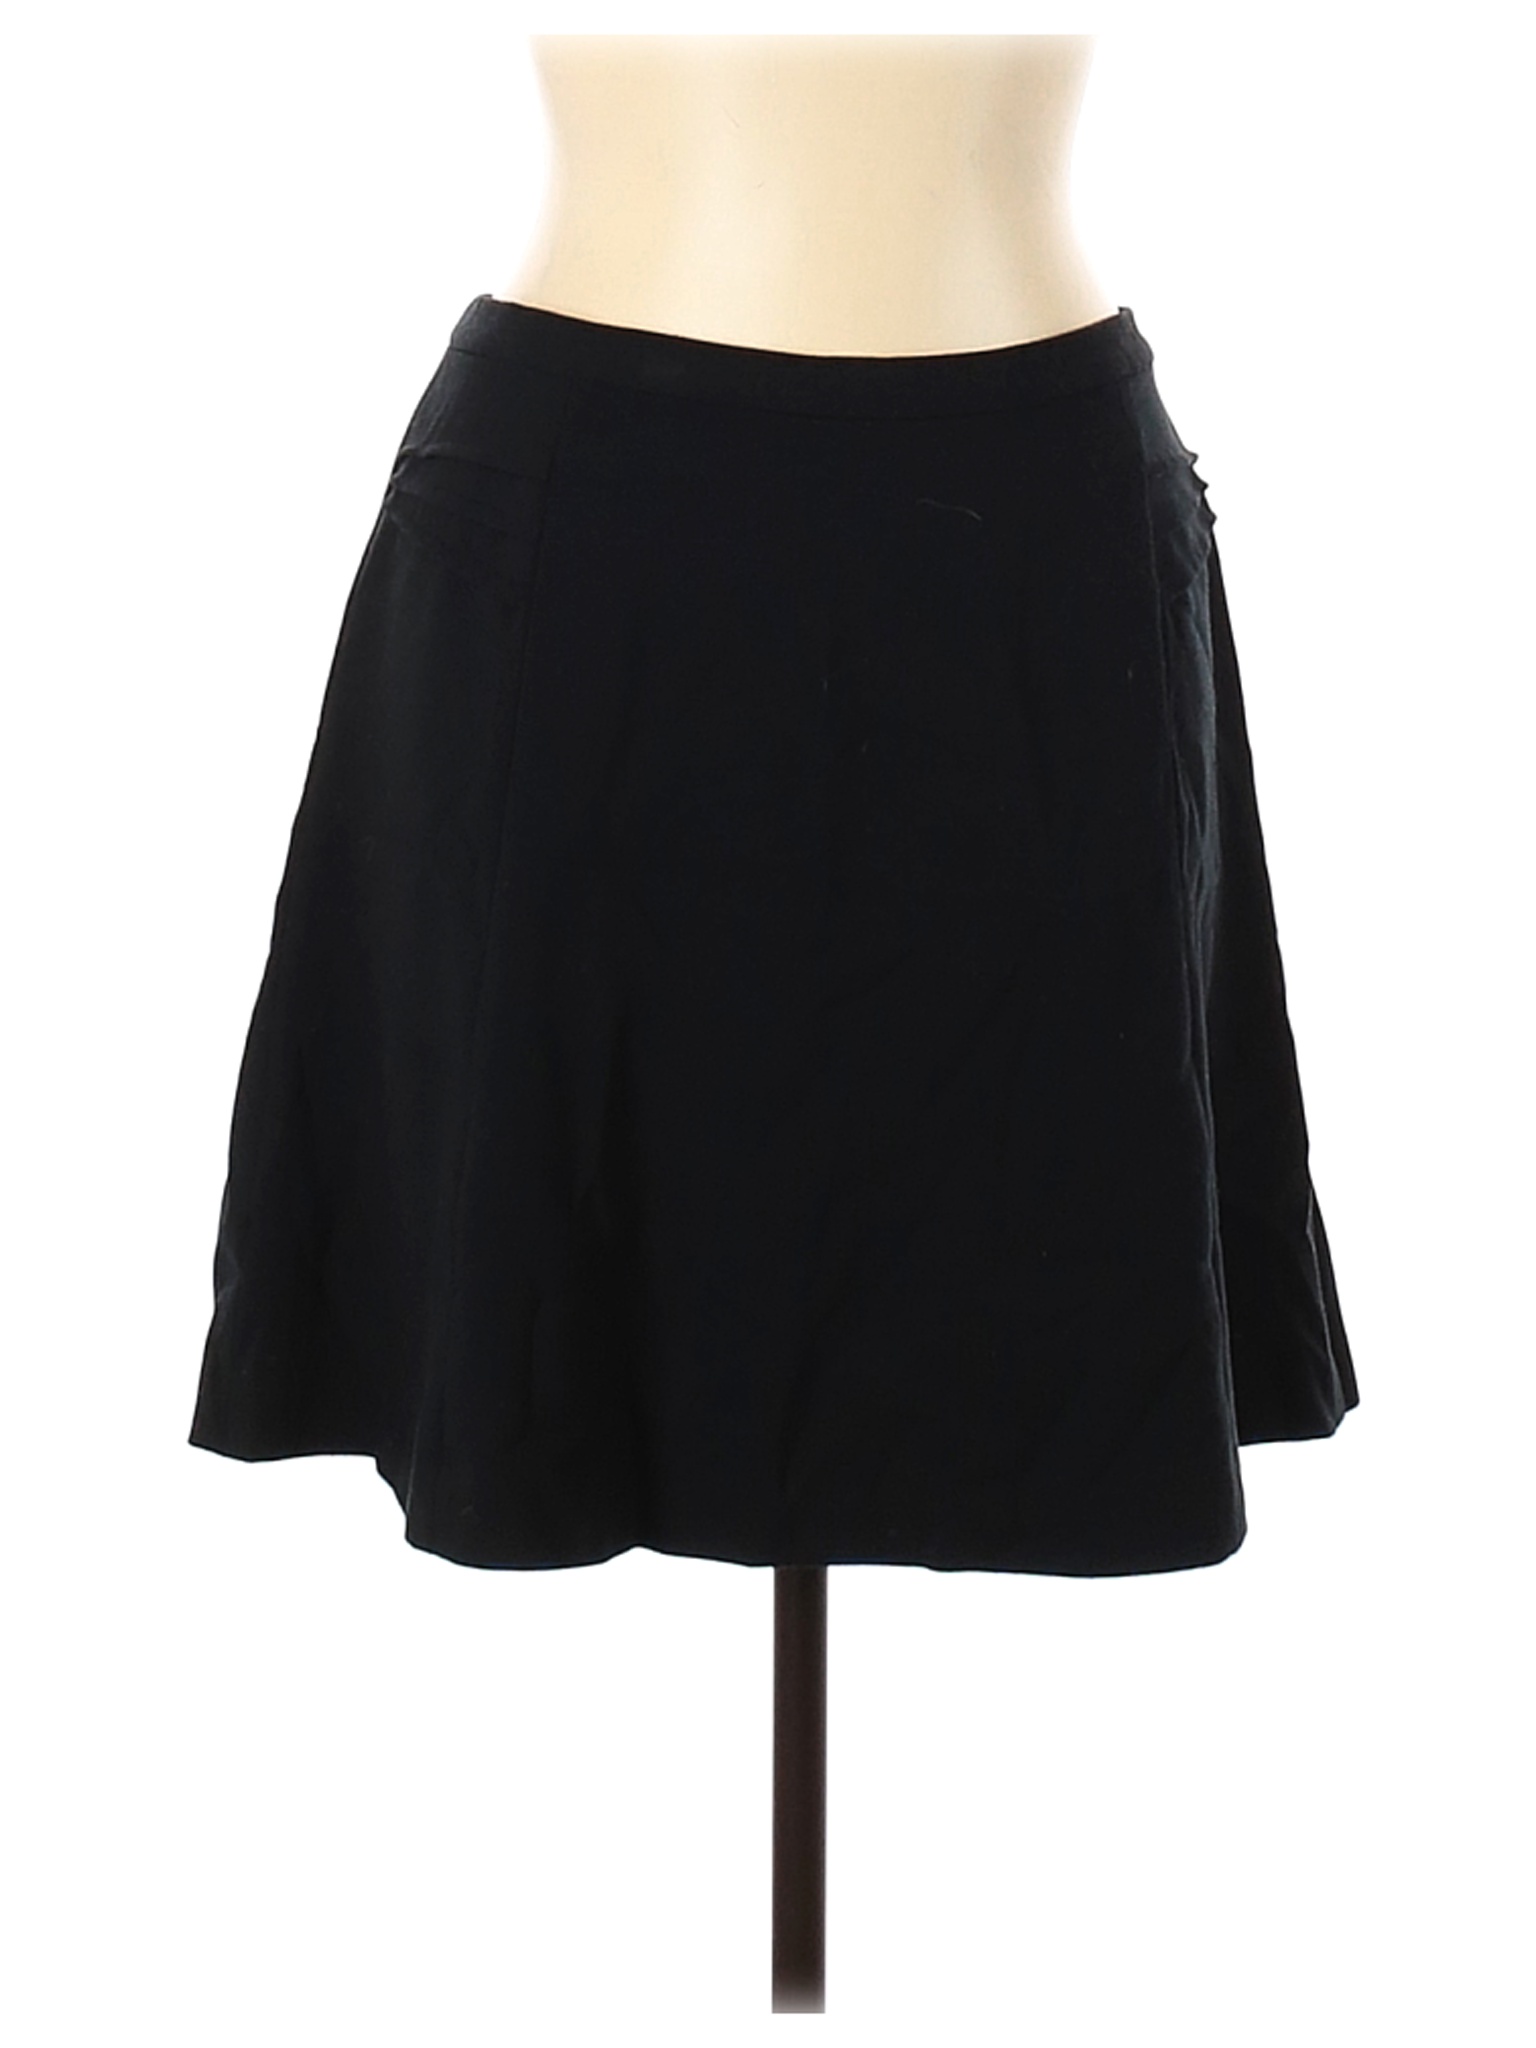 Mossimo Women Black Casual Skirt L | eBay